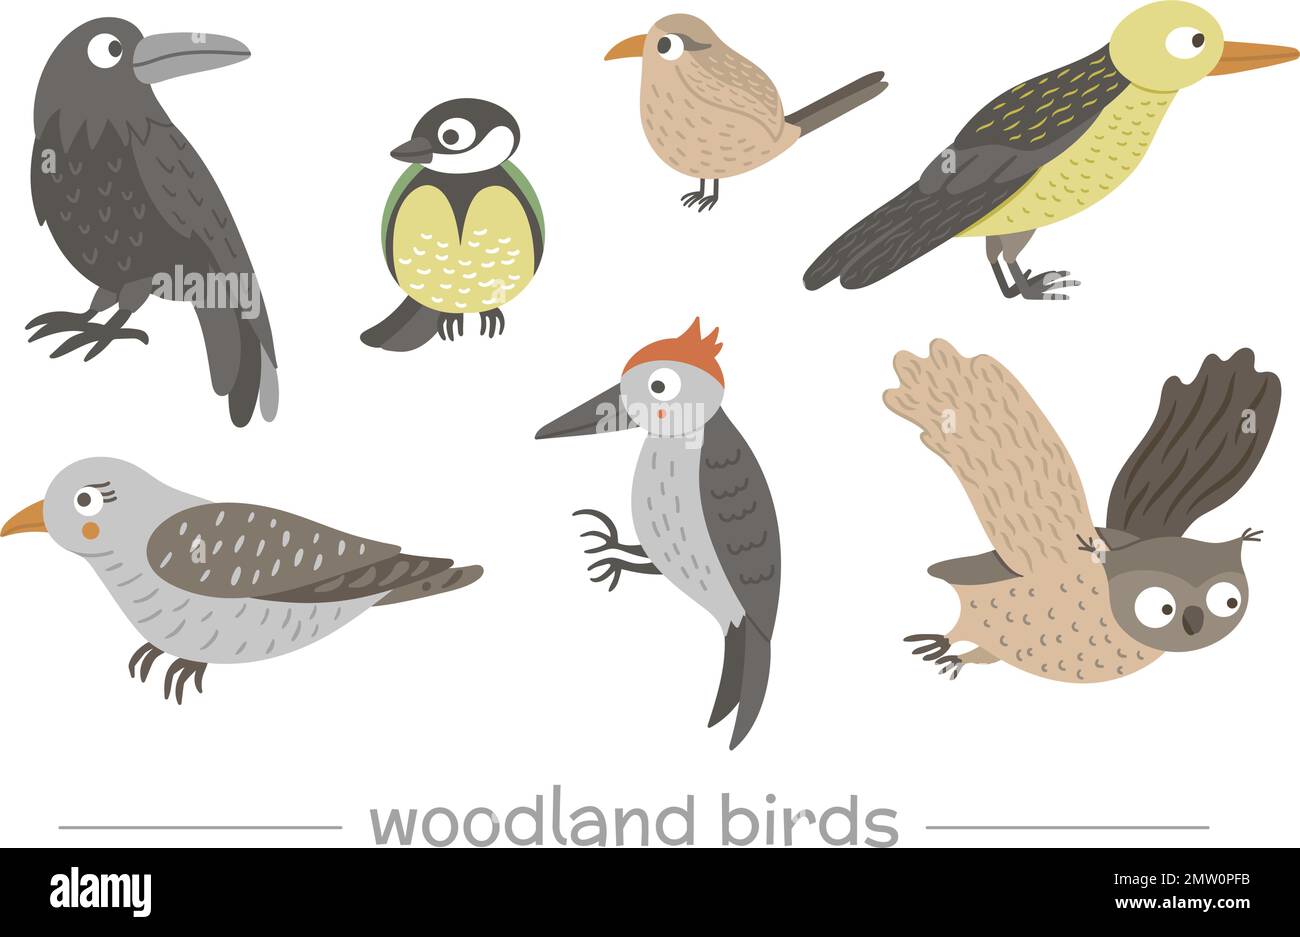 Vector set of cartoon style hand drawn flat funny cuckoos, woodpeckers, owls, raven, wren. Cute illustration of woodland birds for children’s design. Stock Vector